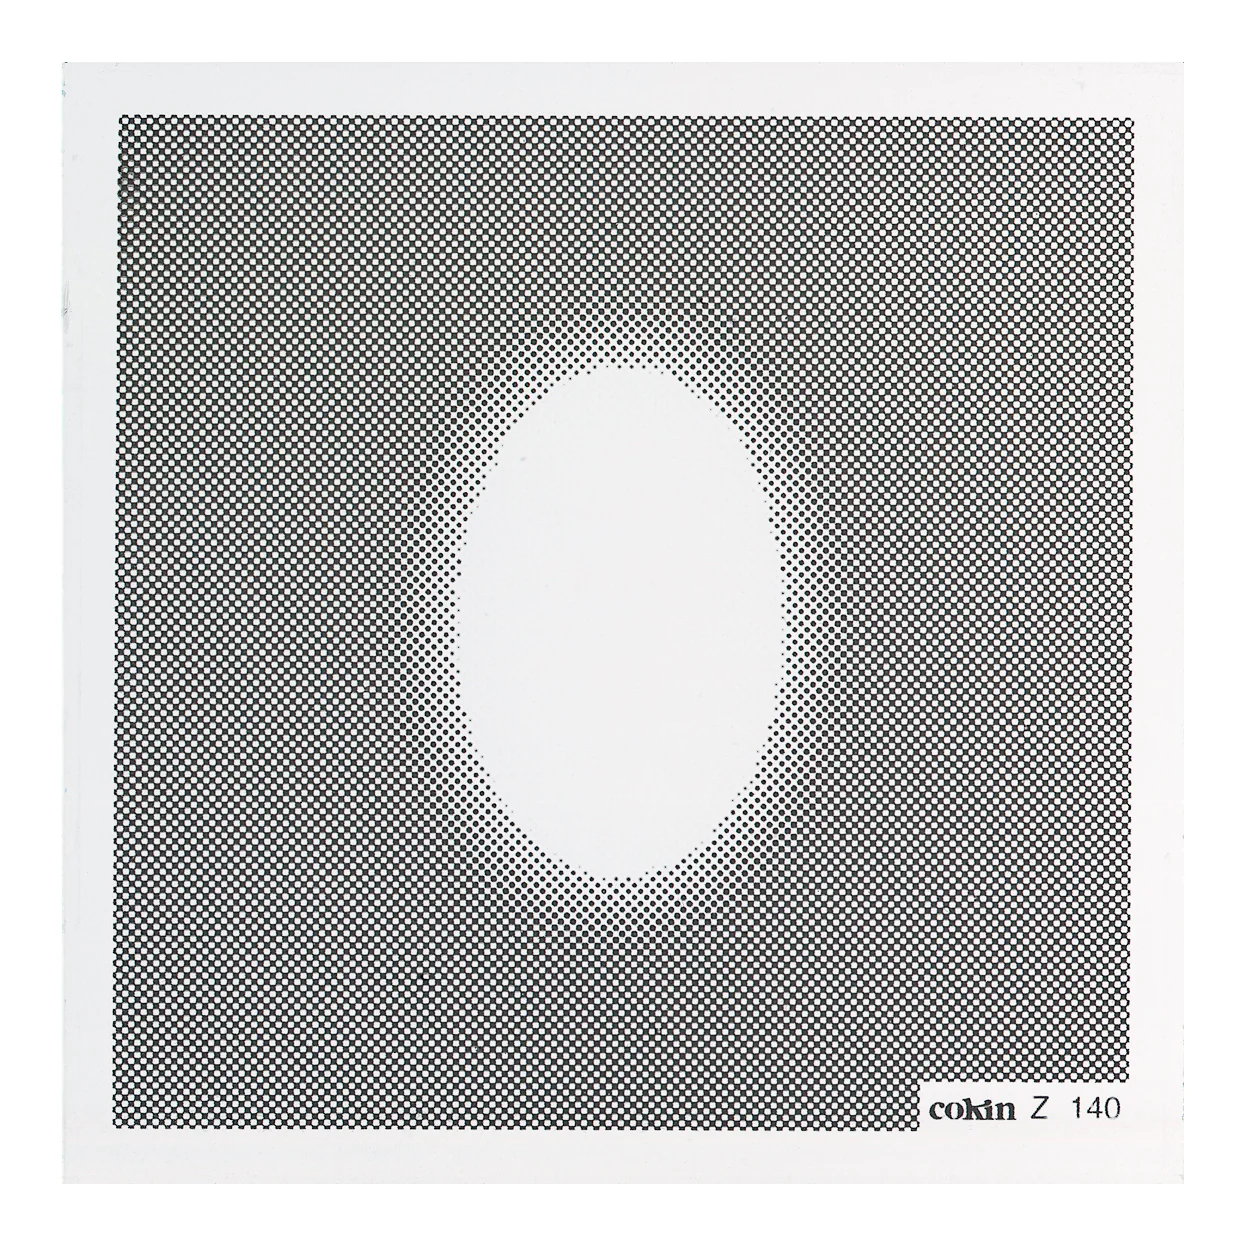 Cokin White Oval Center Spot Filter #140